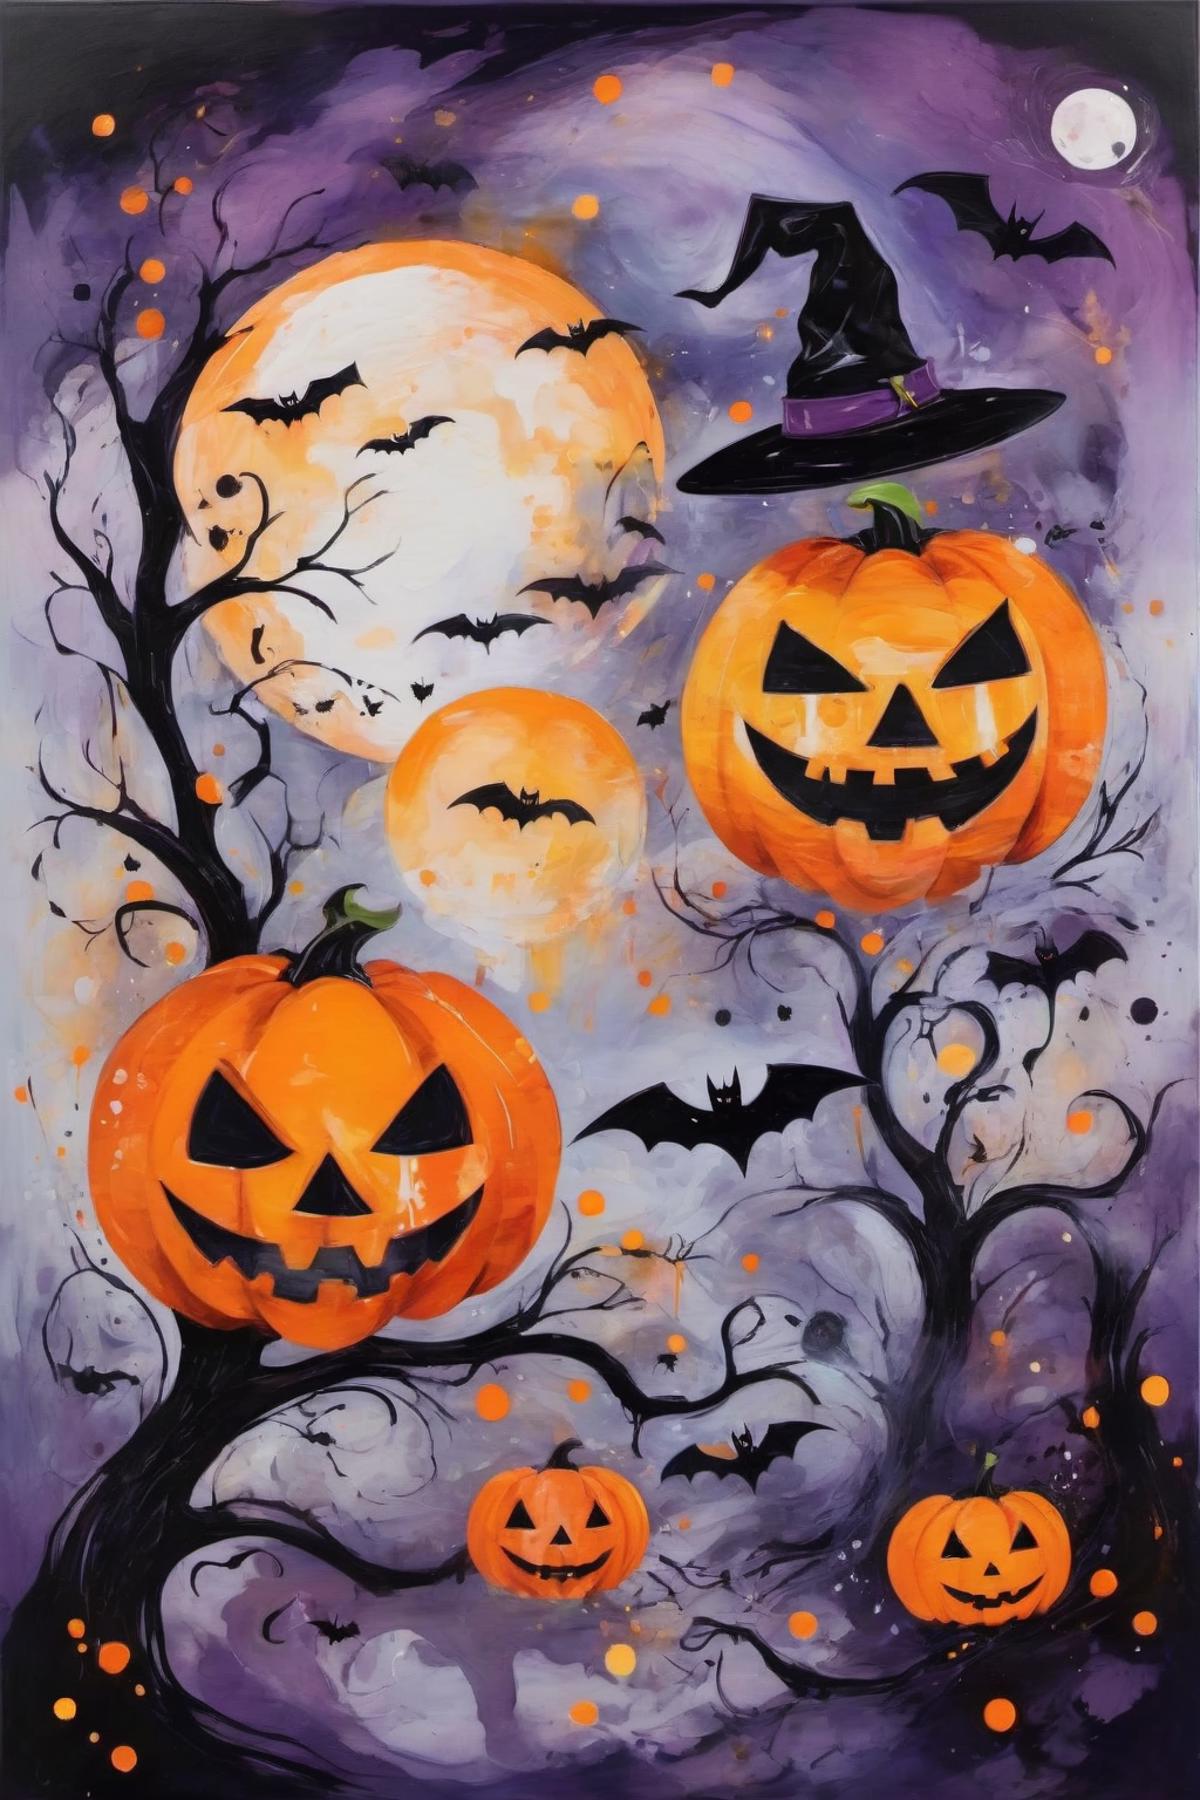 Halloween Whimsical - Wildcards image by Tokugawa